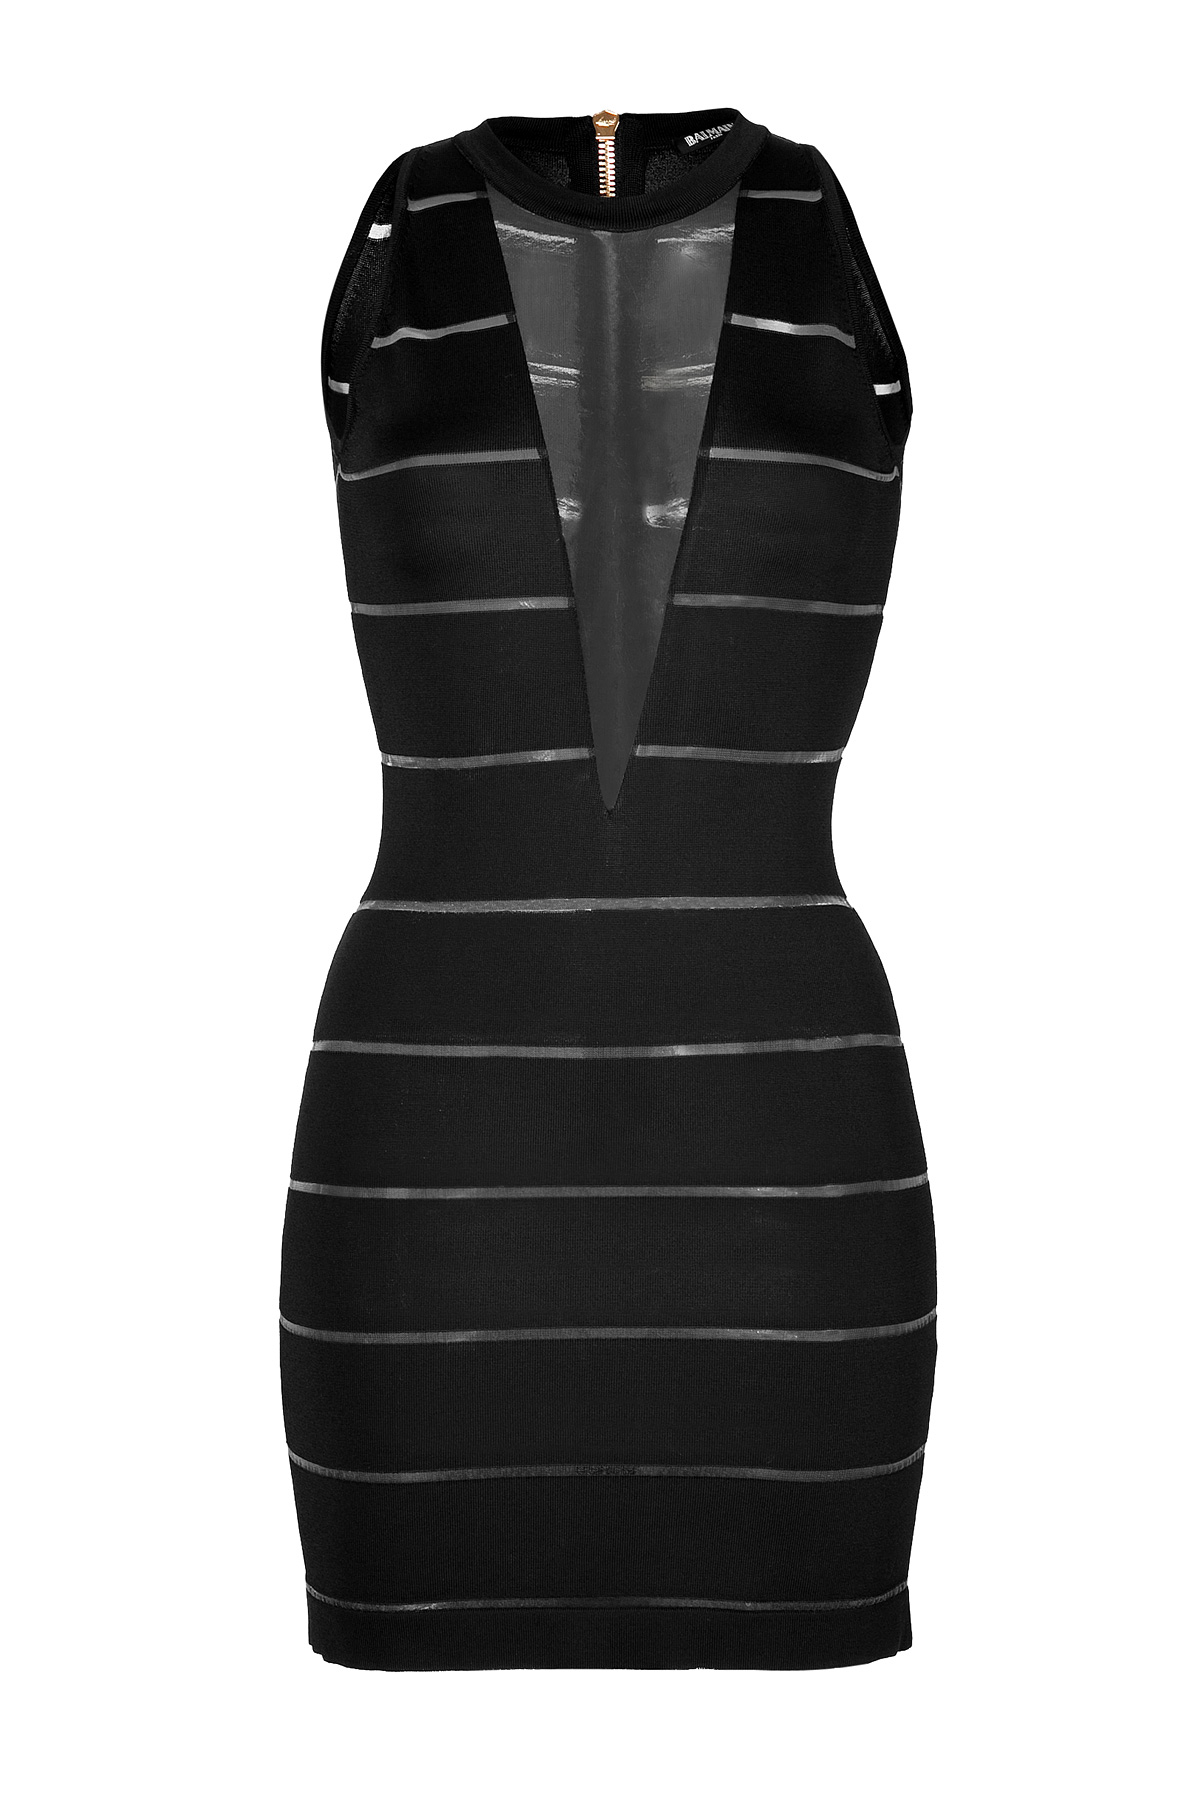 Lyst - Balmain Sheer Panel Sheath Dress in Black